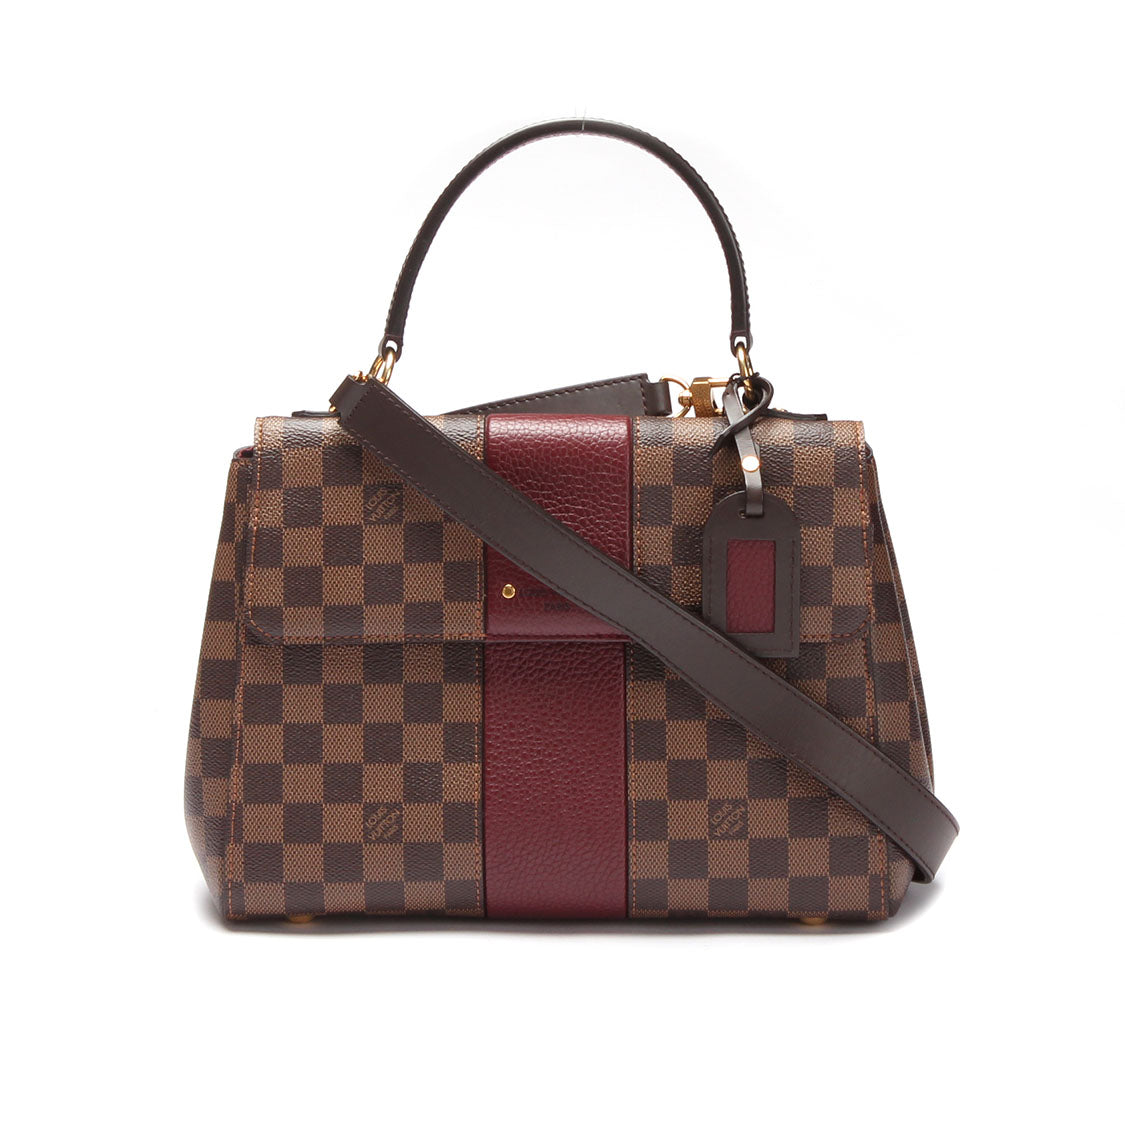 Louis Vuitton Damier Ebene Bond Street Canvas Handbag in Excellent condition